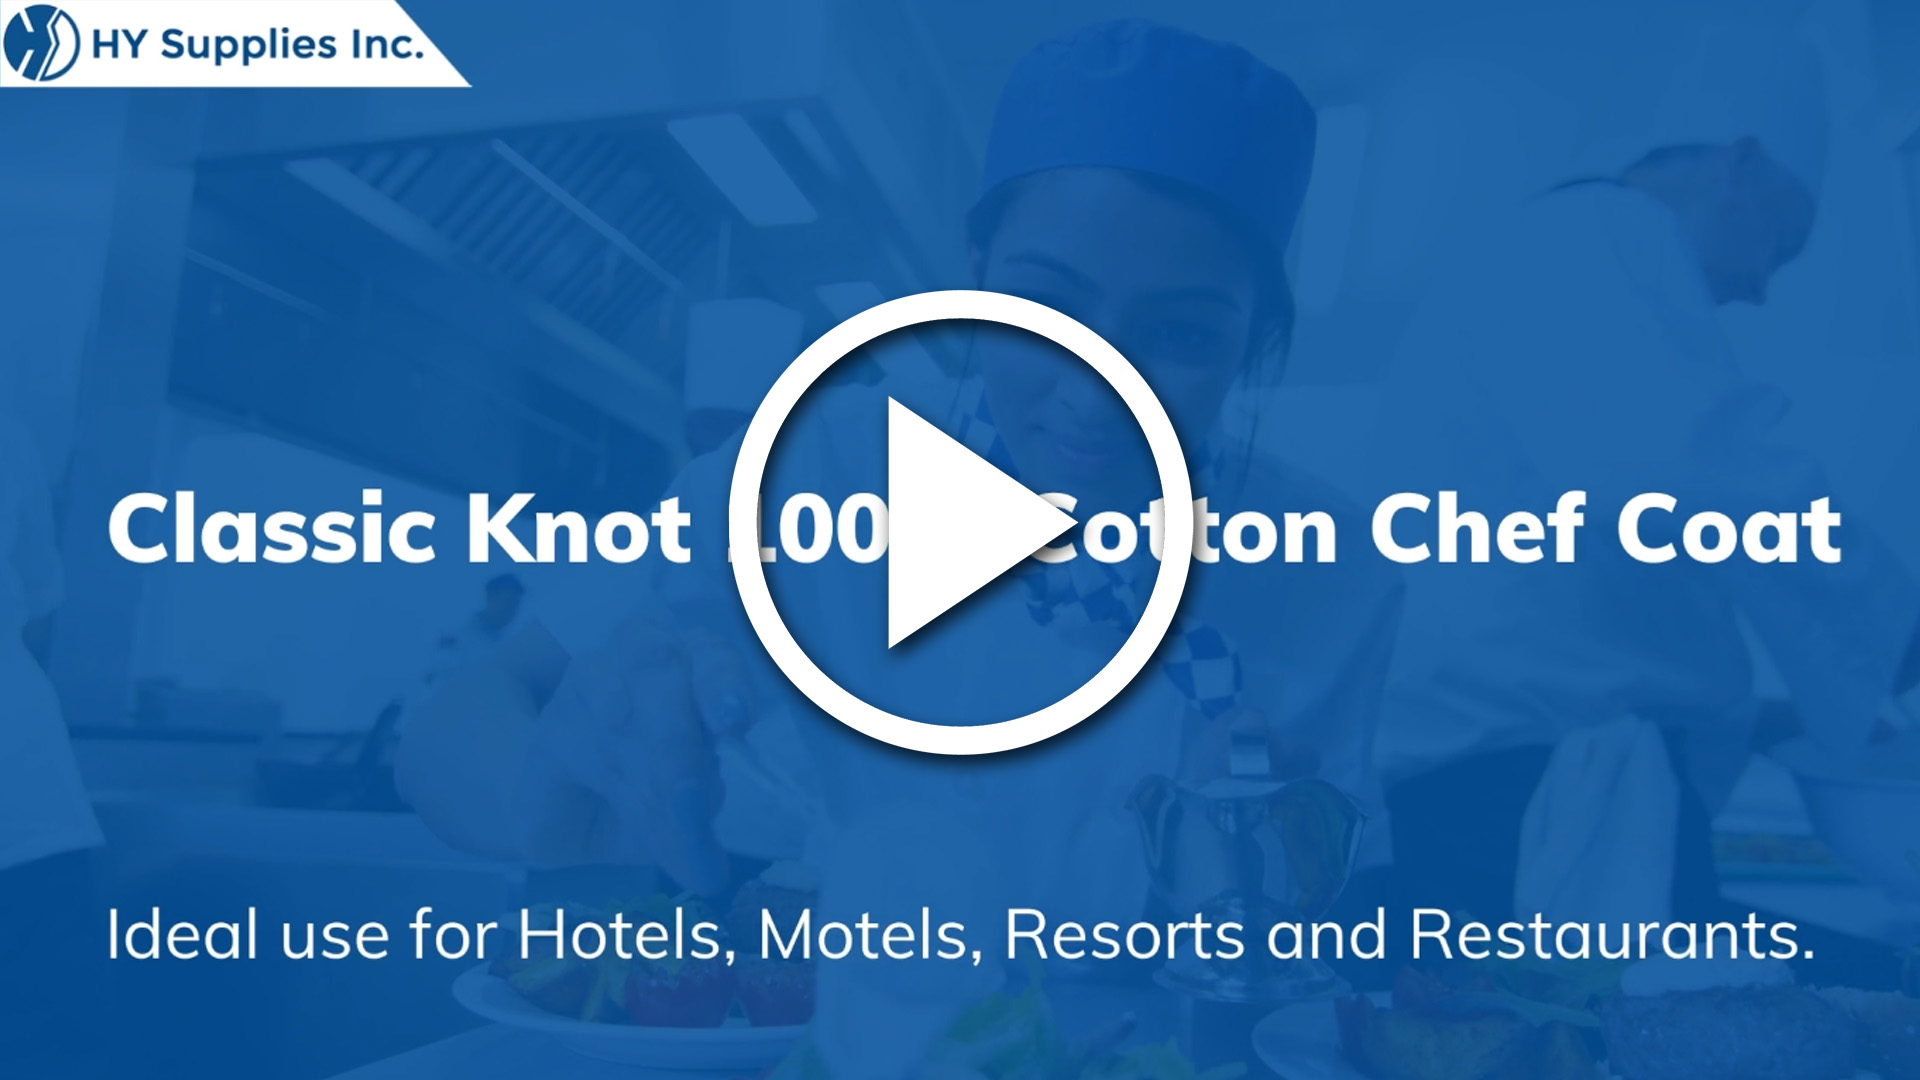 Classic Knot 100% Cotton Chef coat